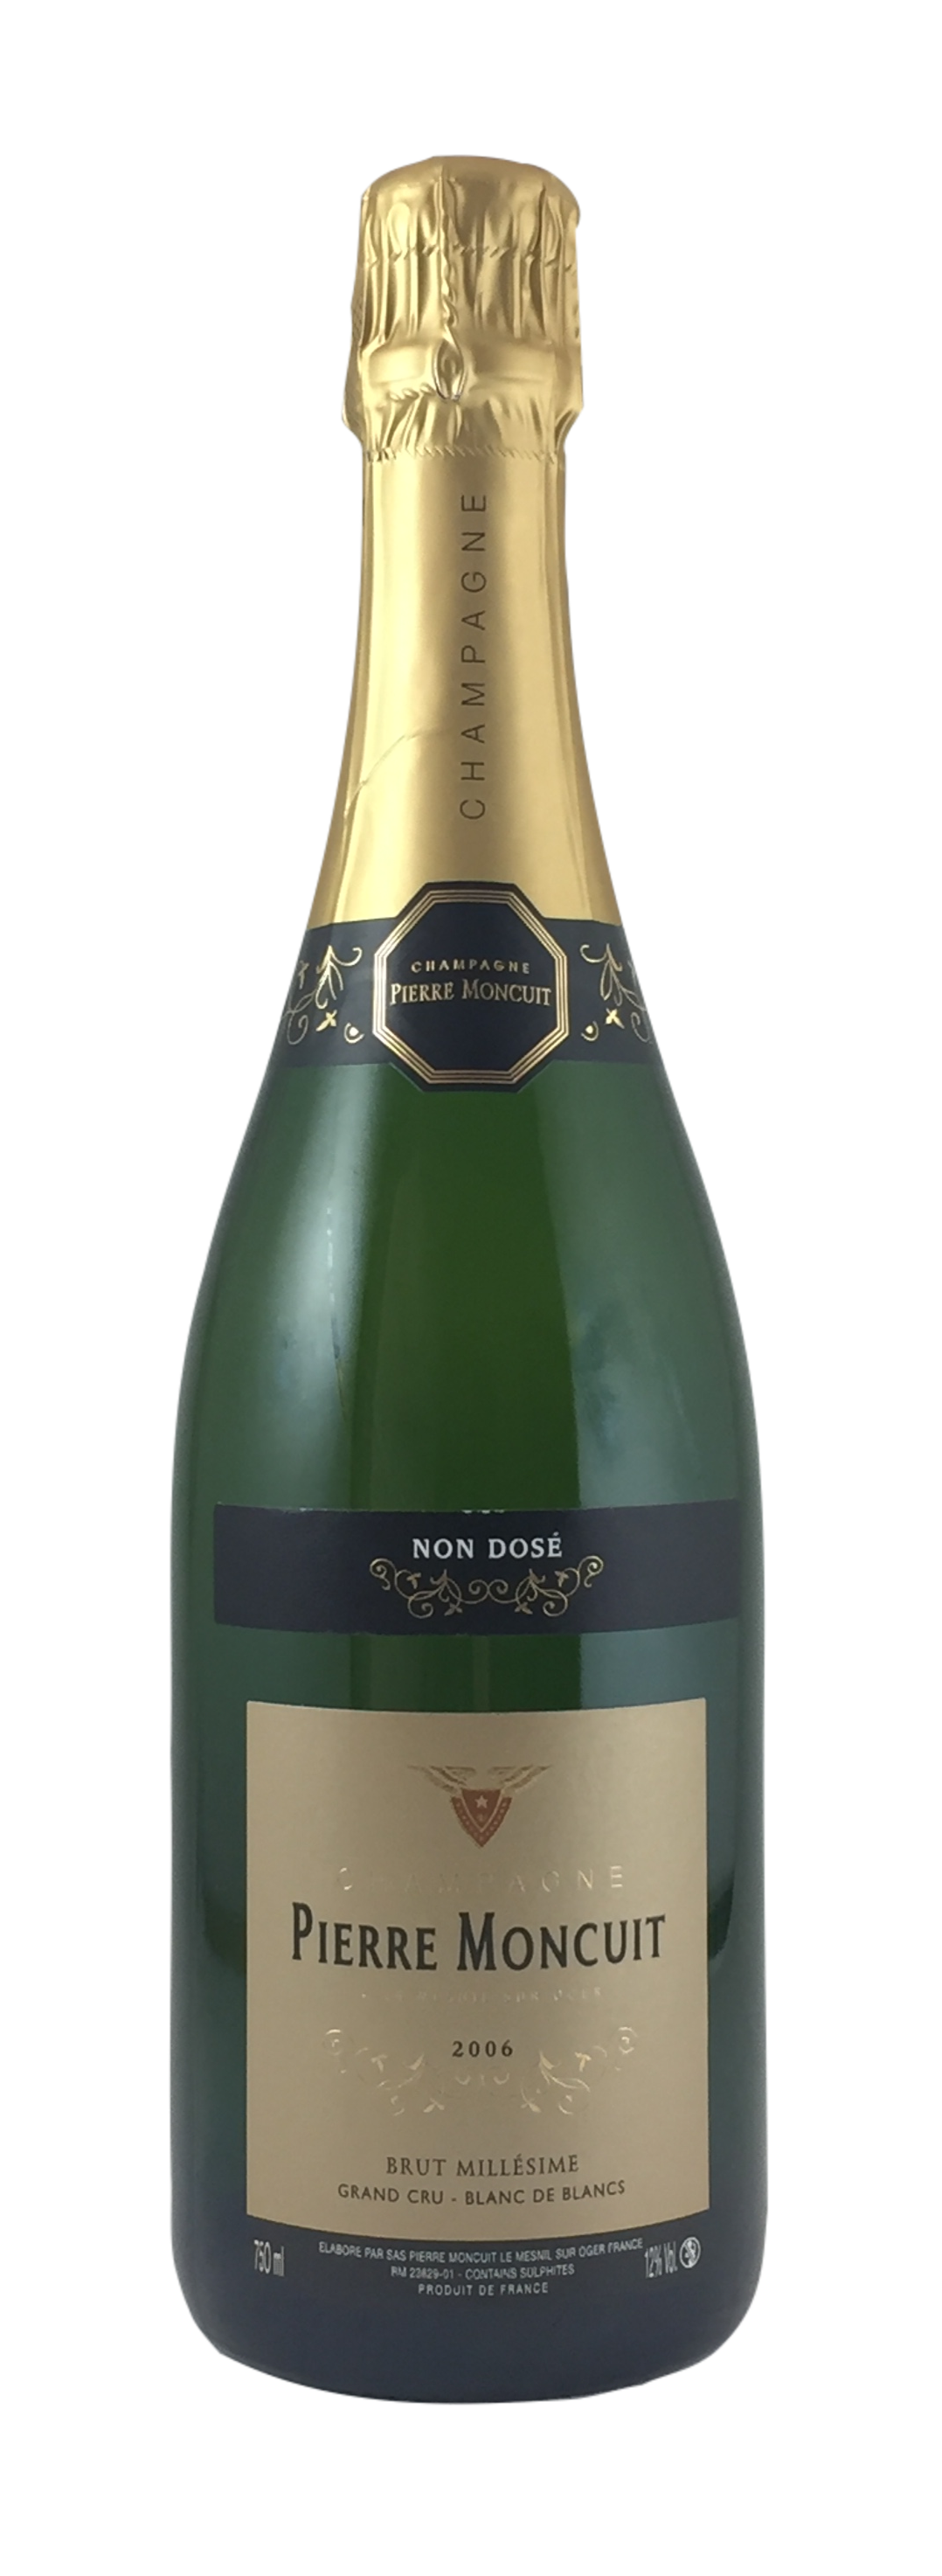 Champagne Pierre Moncuit - Blanc de BlancMillesime 2006 Non Dose